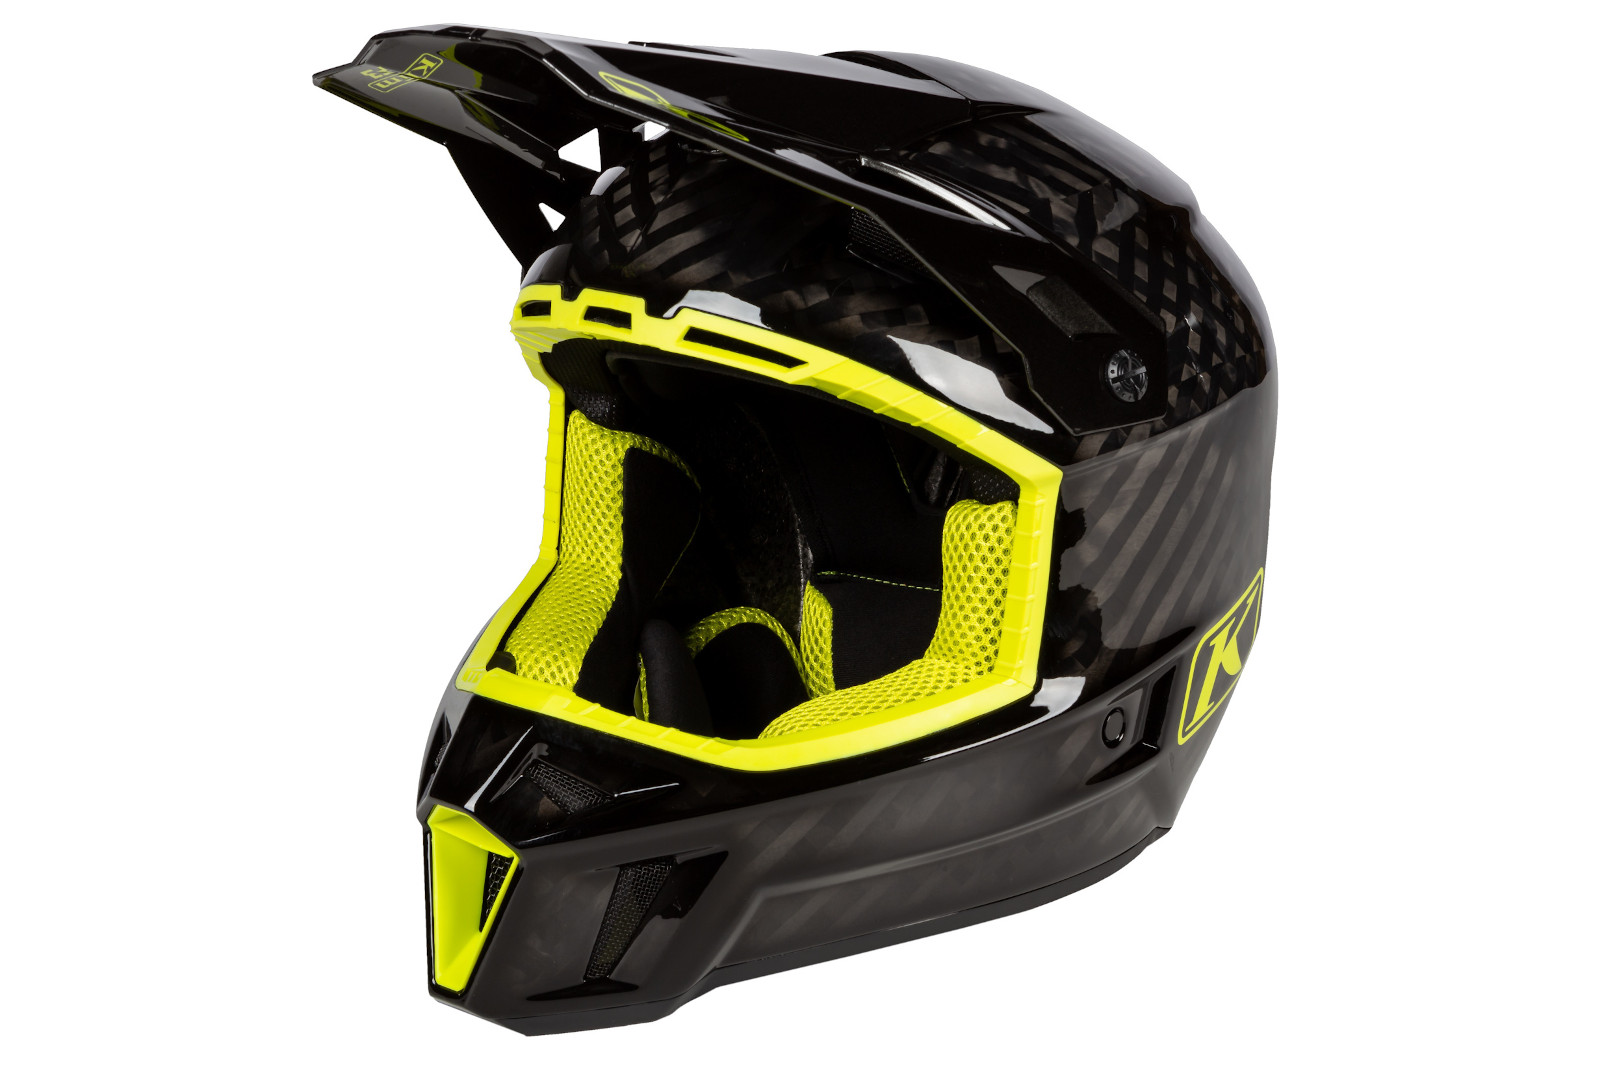 New F3 Carbon helmet by KLIM